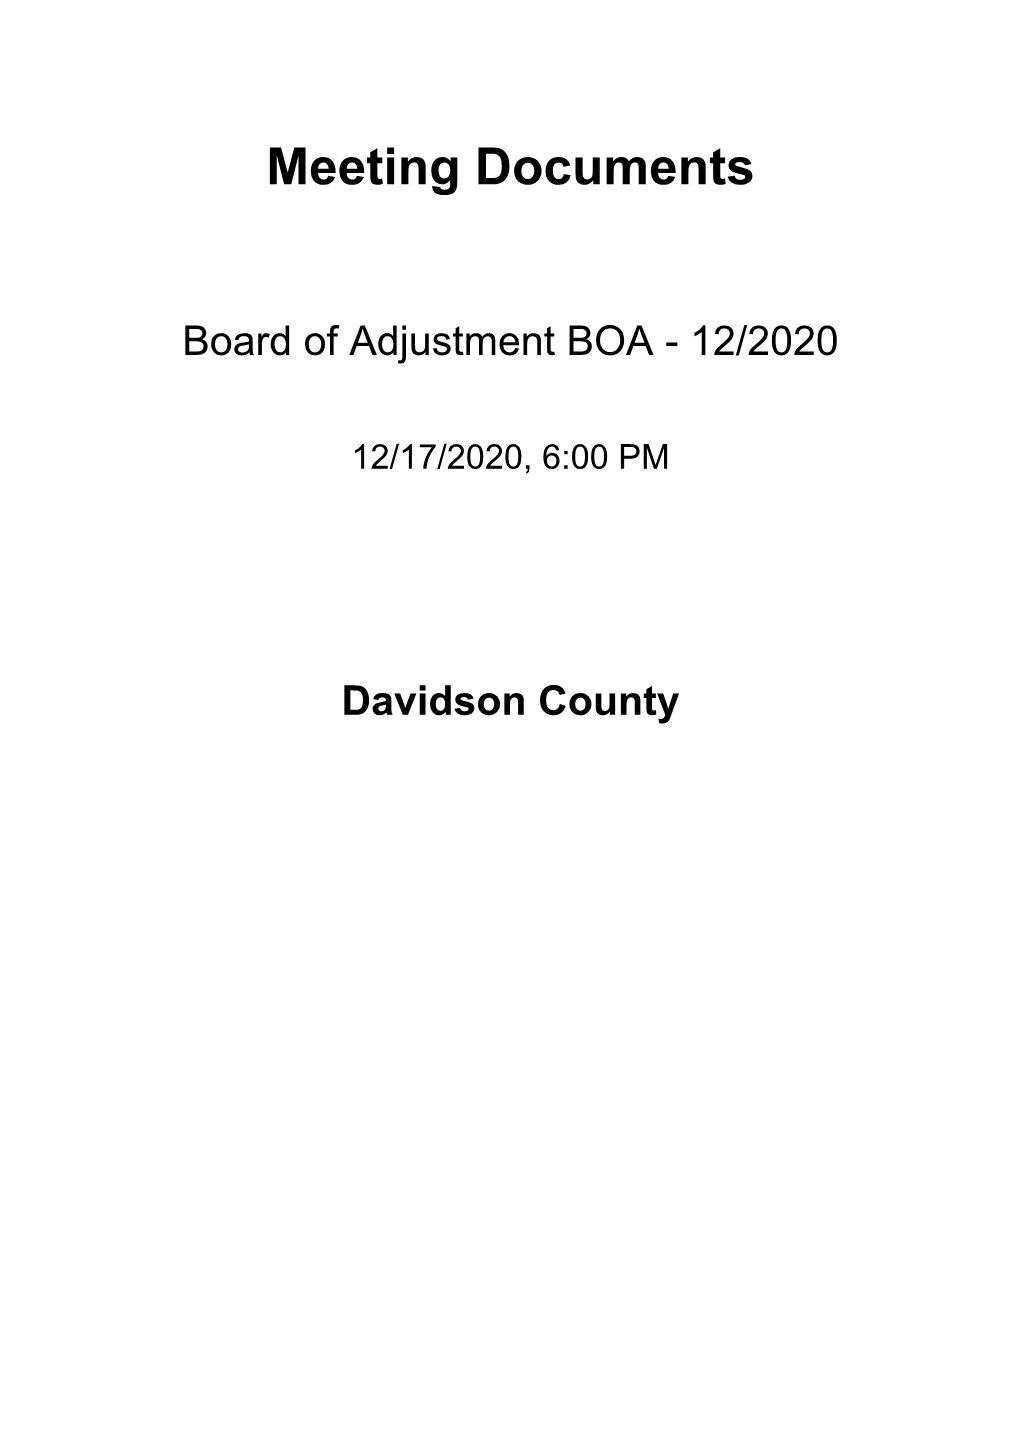 Meeting Documents Board of Adjustment BOA